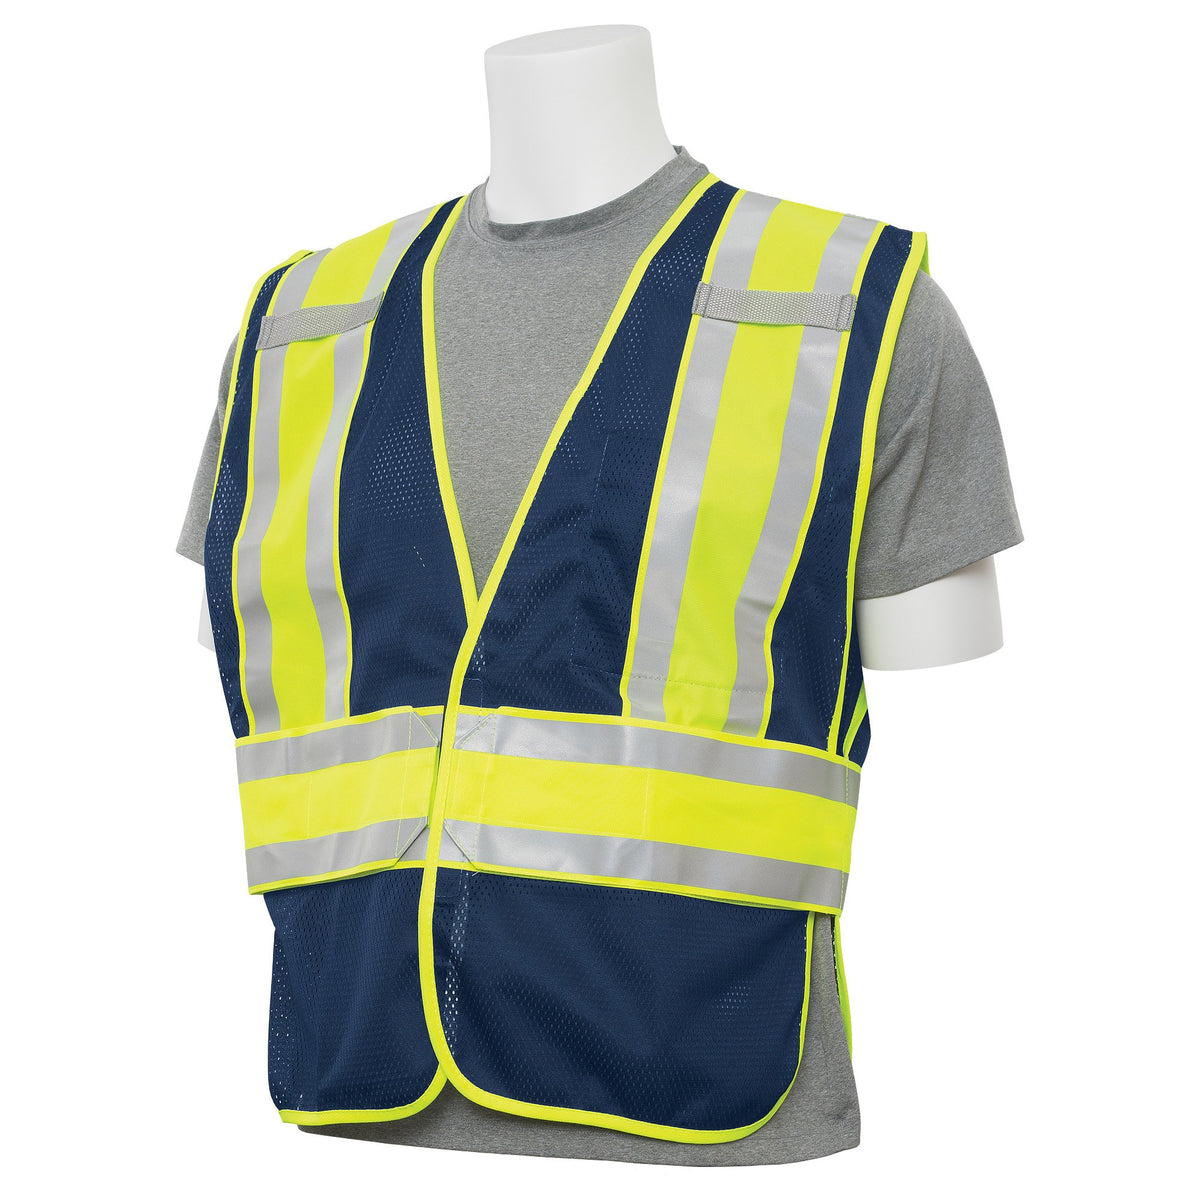 S530 Non-ANSI Expandable Safety Vest